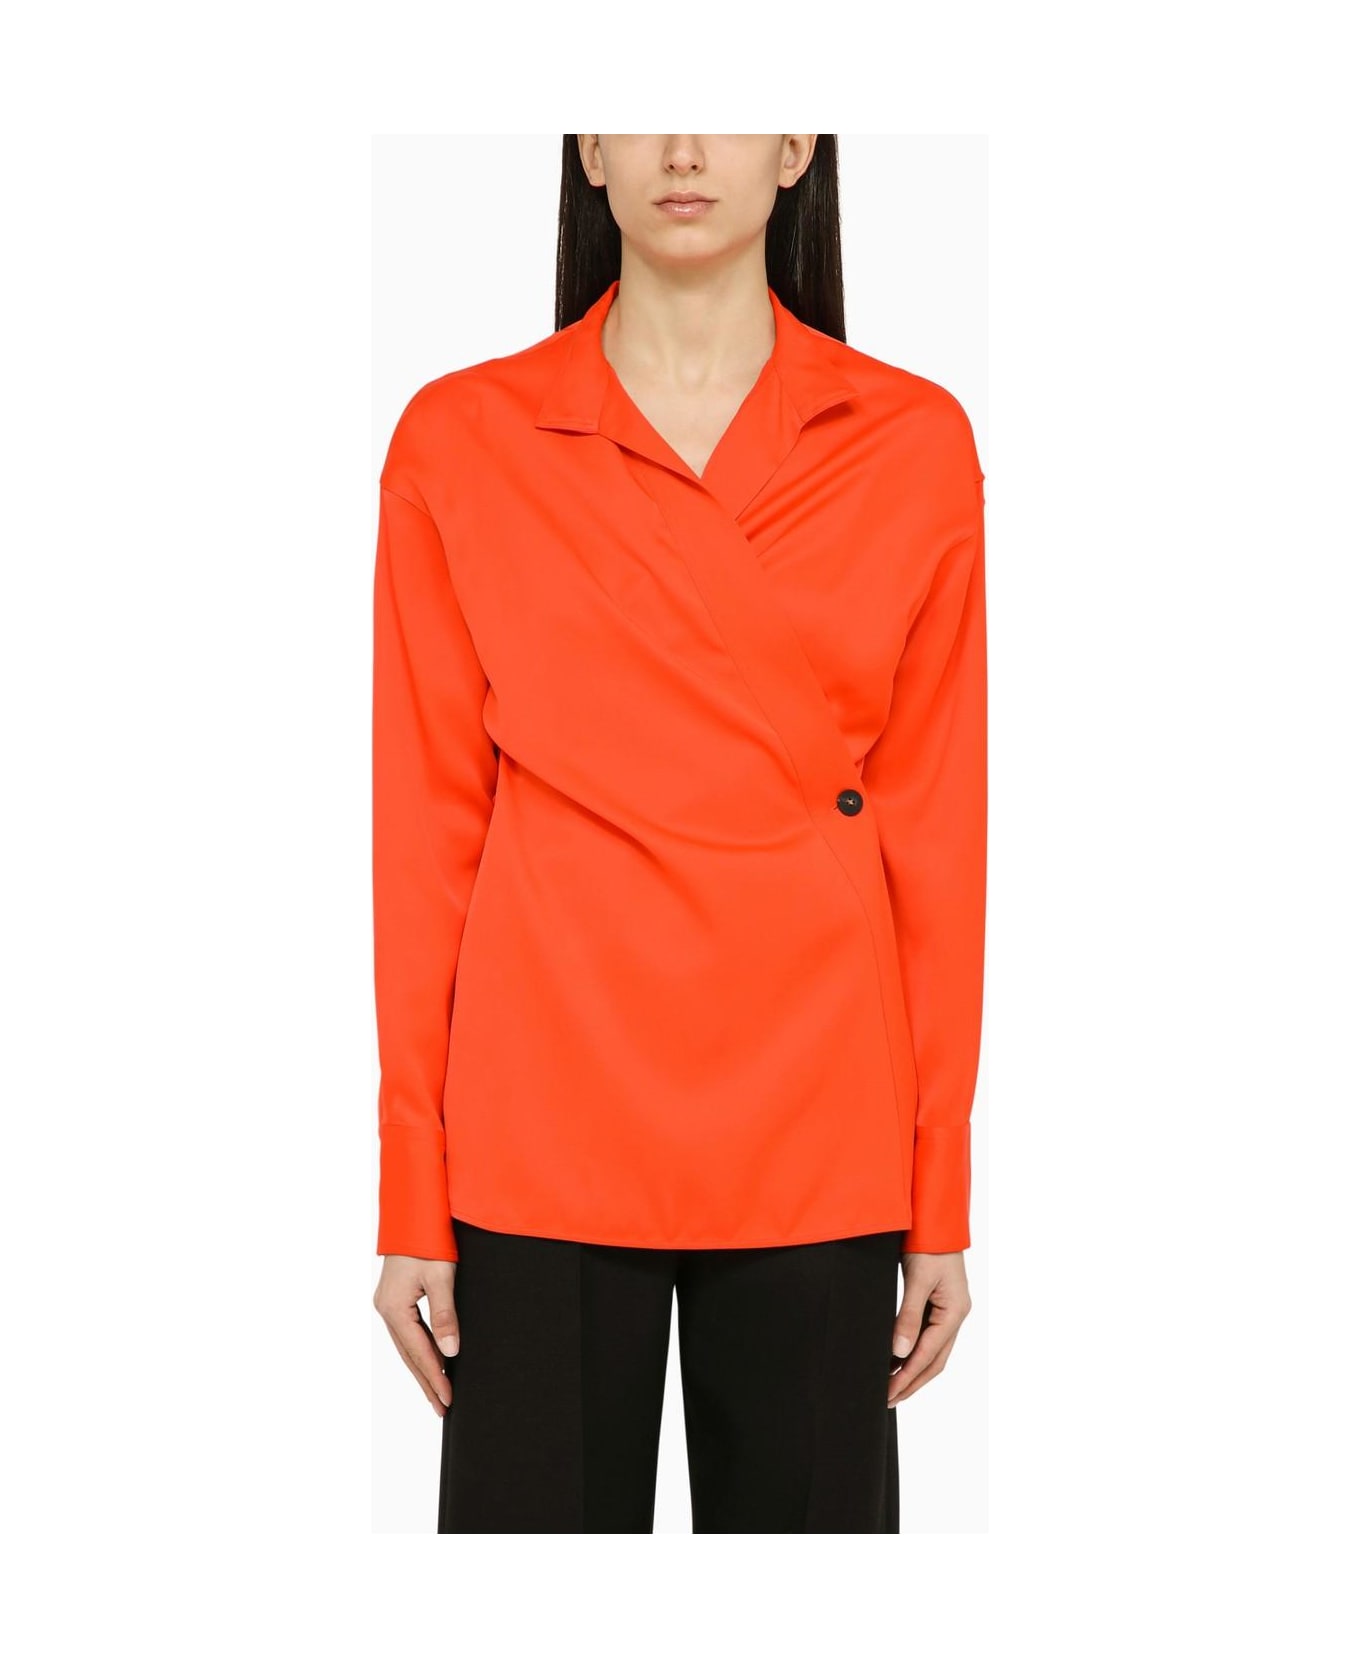 Ferragamo Shirt With Asymmetrical Closure Orange - Orange シャツ